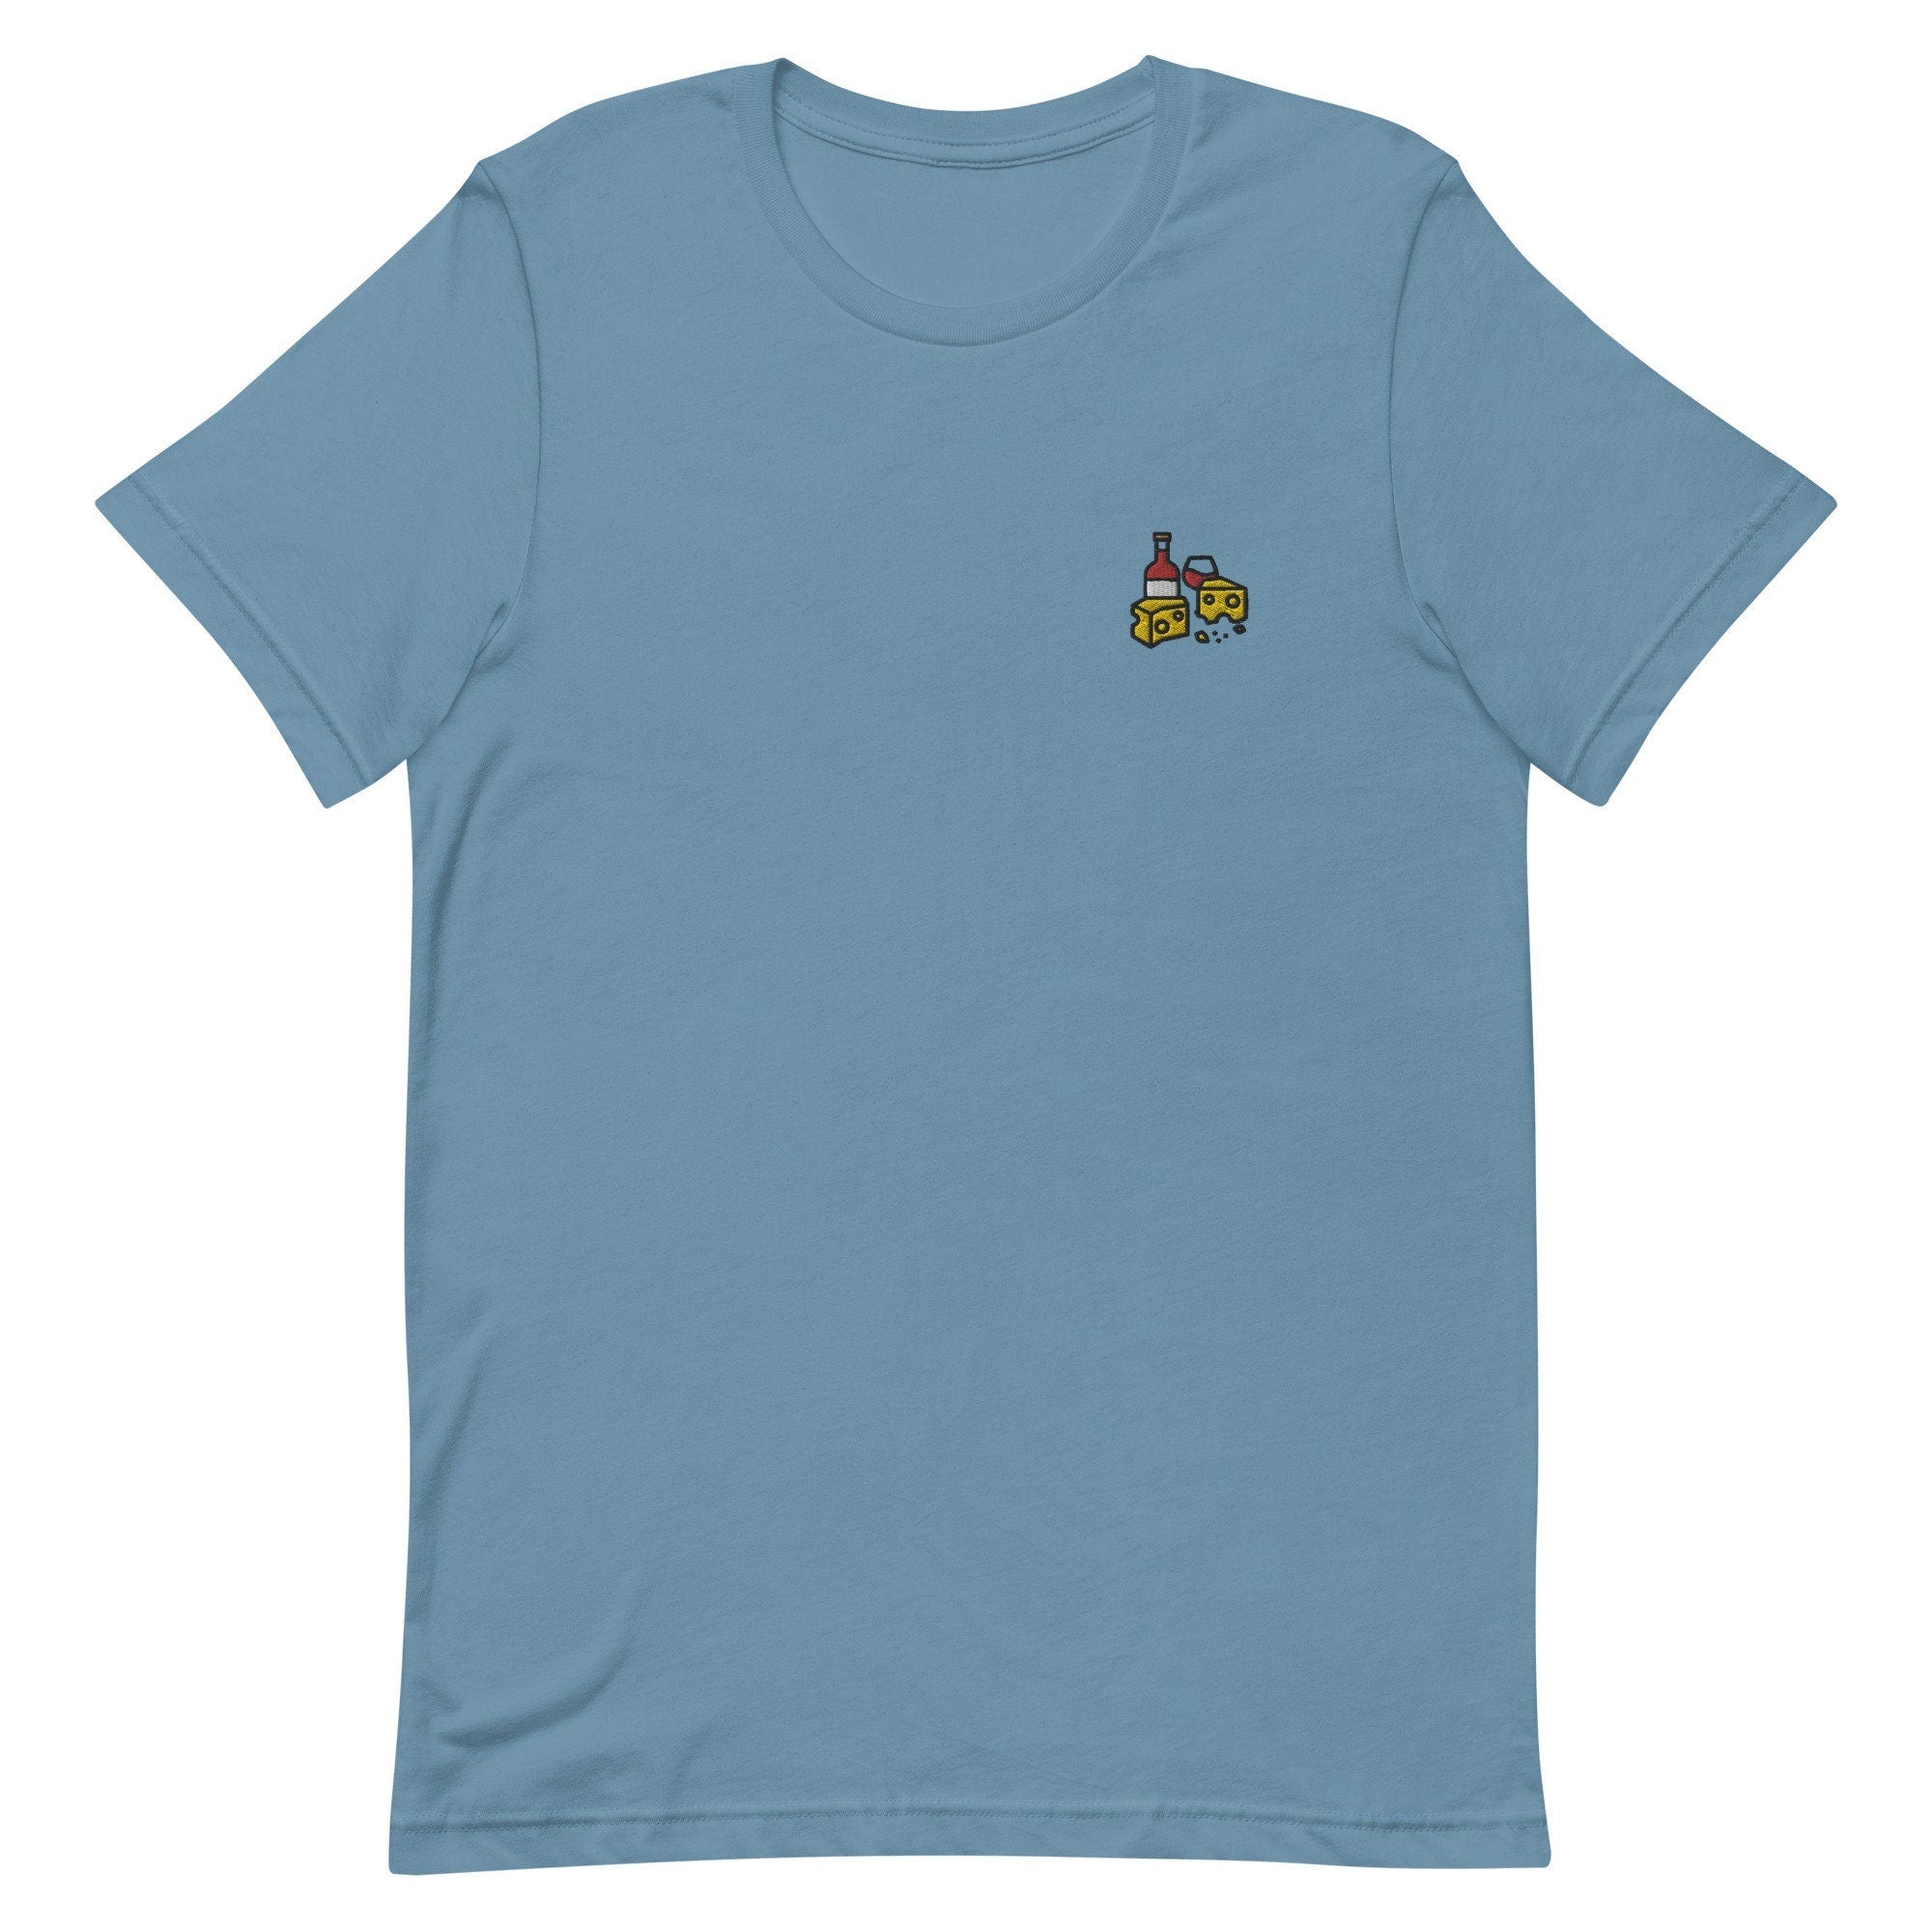 Wine and Cheese Premium Men's T-Shirt, Embroidered Men's T-Shirt Gift for Boyfriend, Men's Short Sleeve Shirt - Multiple Colors